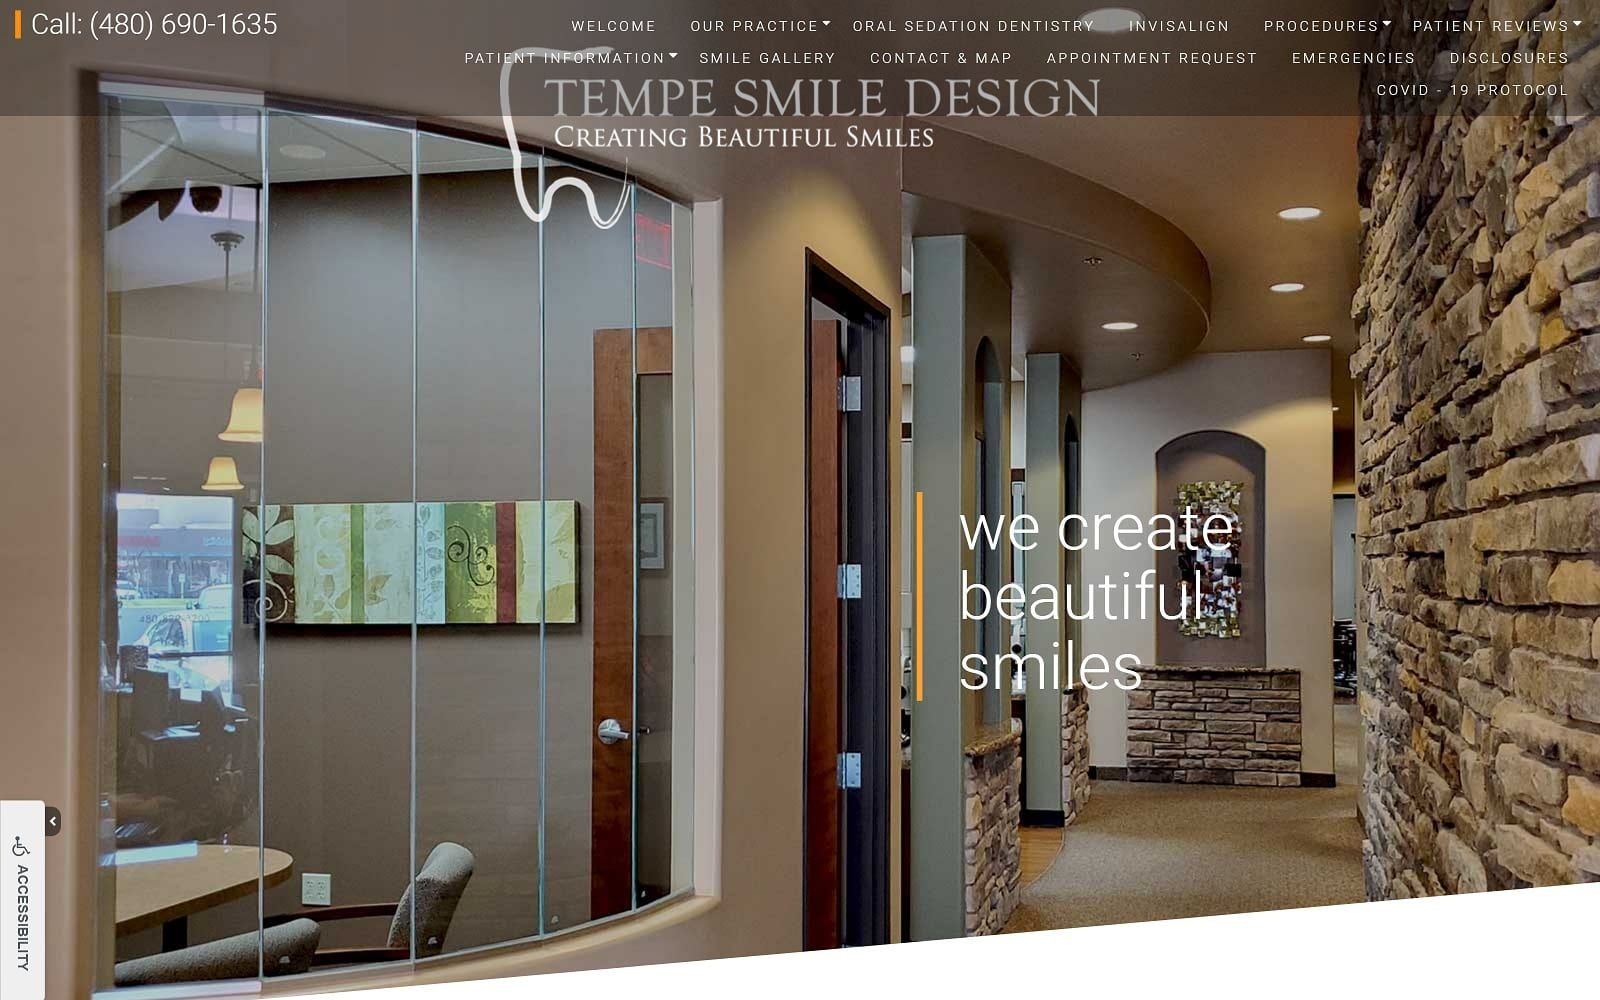 The screenshot of tempe smile design tempesmiledesign. Com website